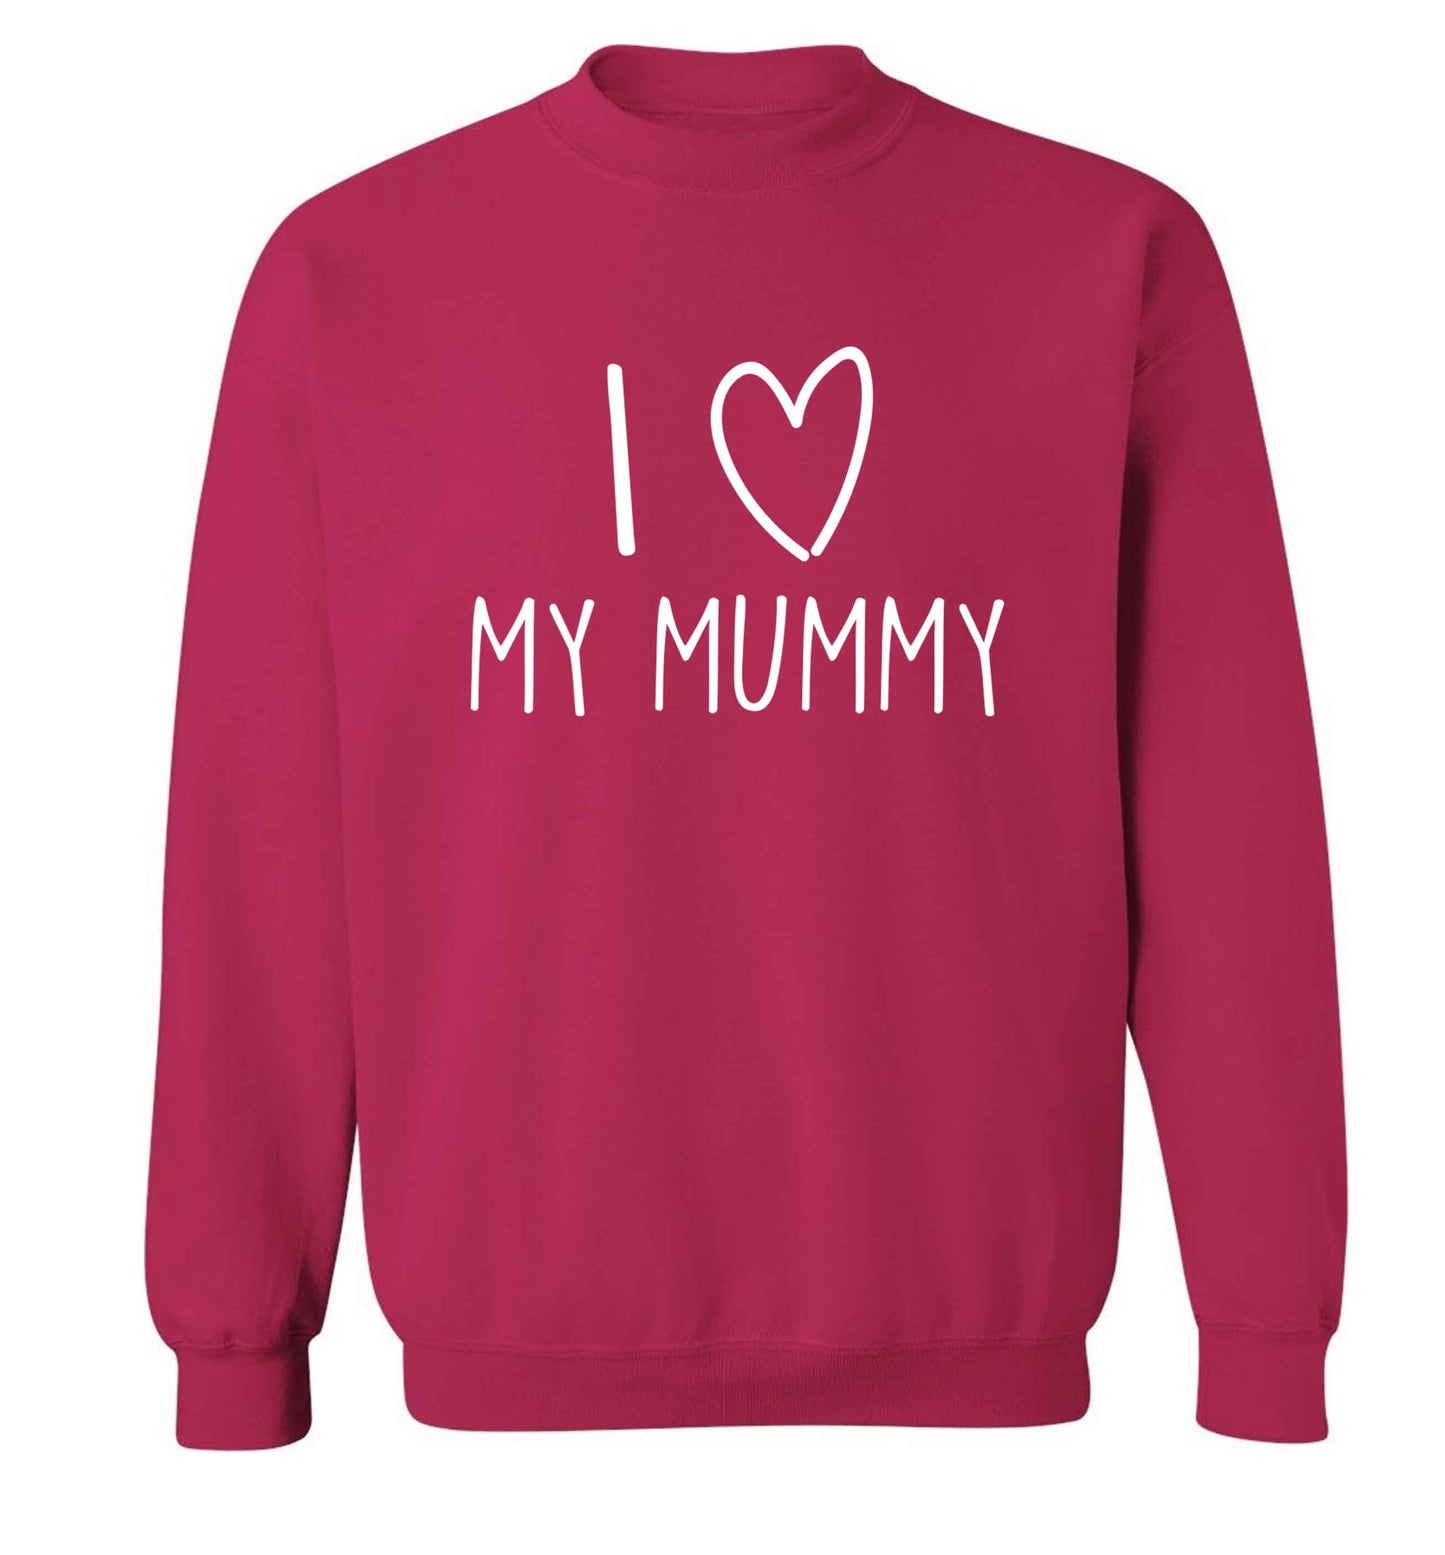 I love my mummy adult's unisex pink sweater 2XL